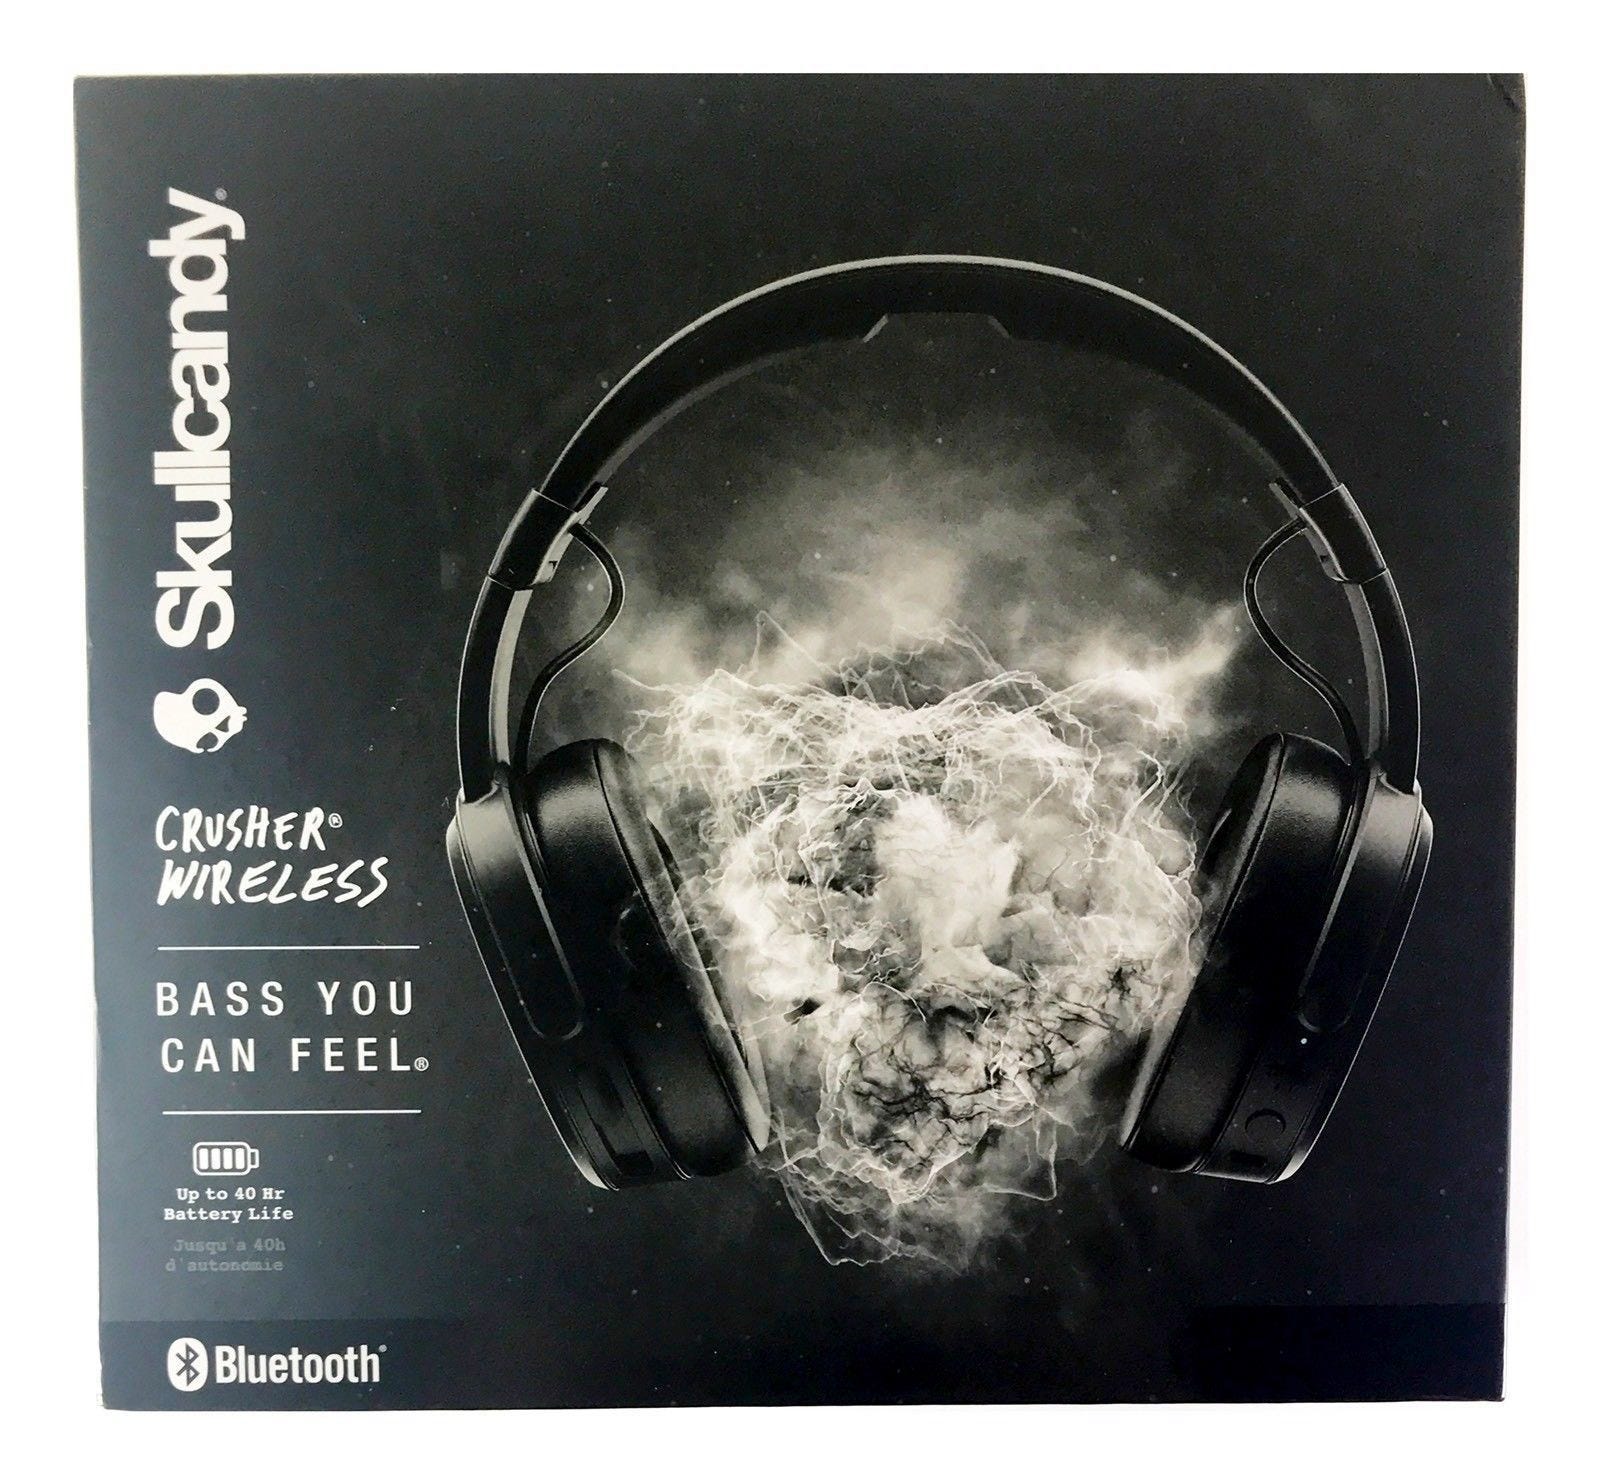 Skullcandy Bluetooth Headphones Not Visible | Store www.metaforacom.com